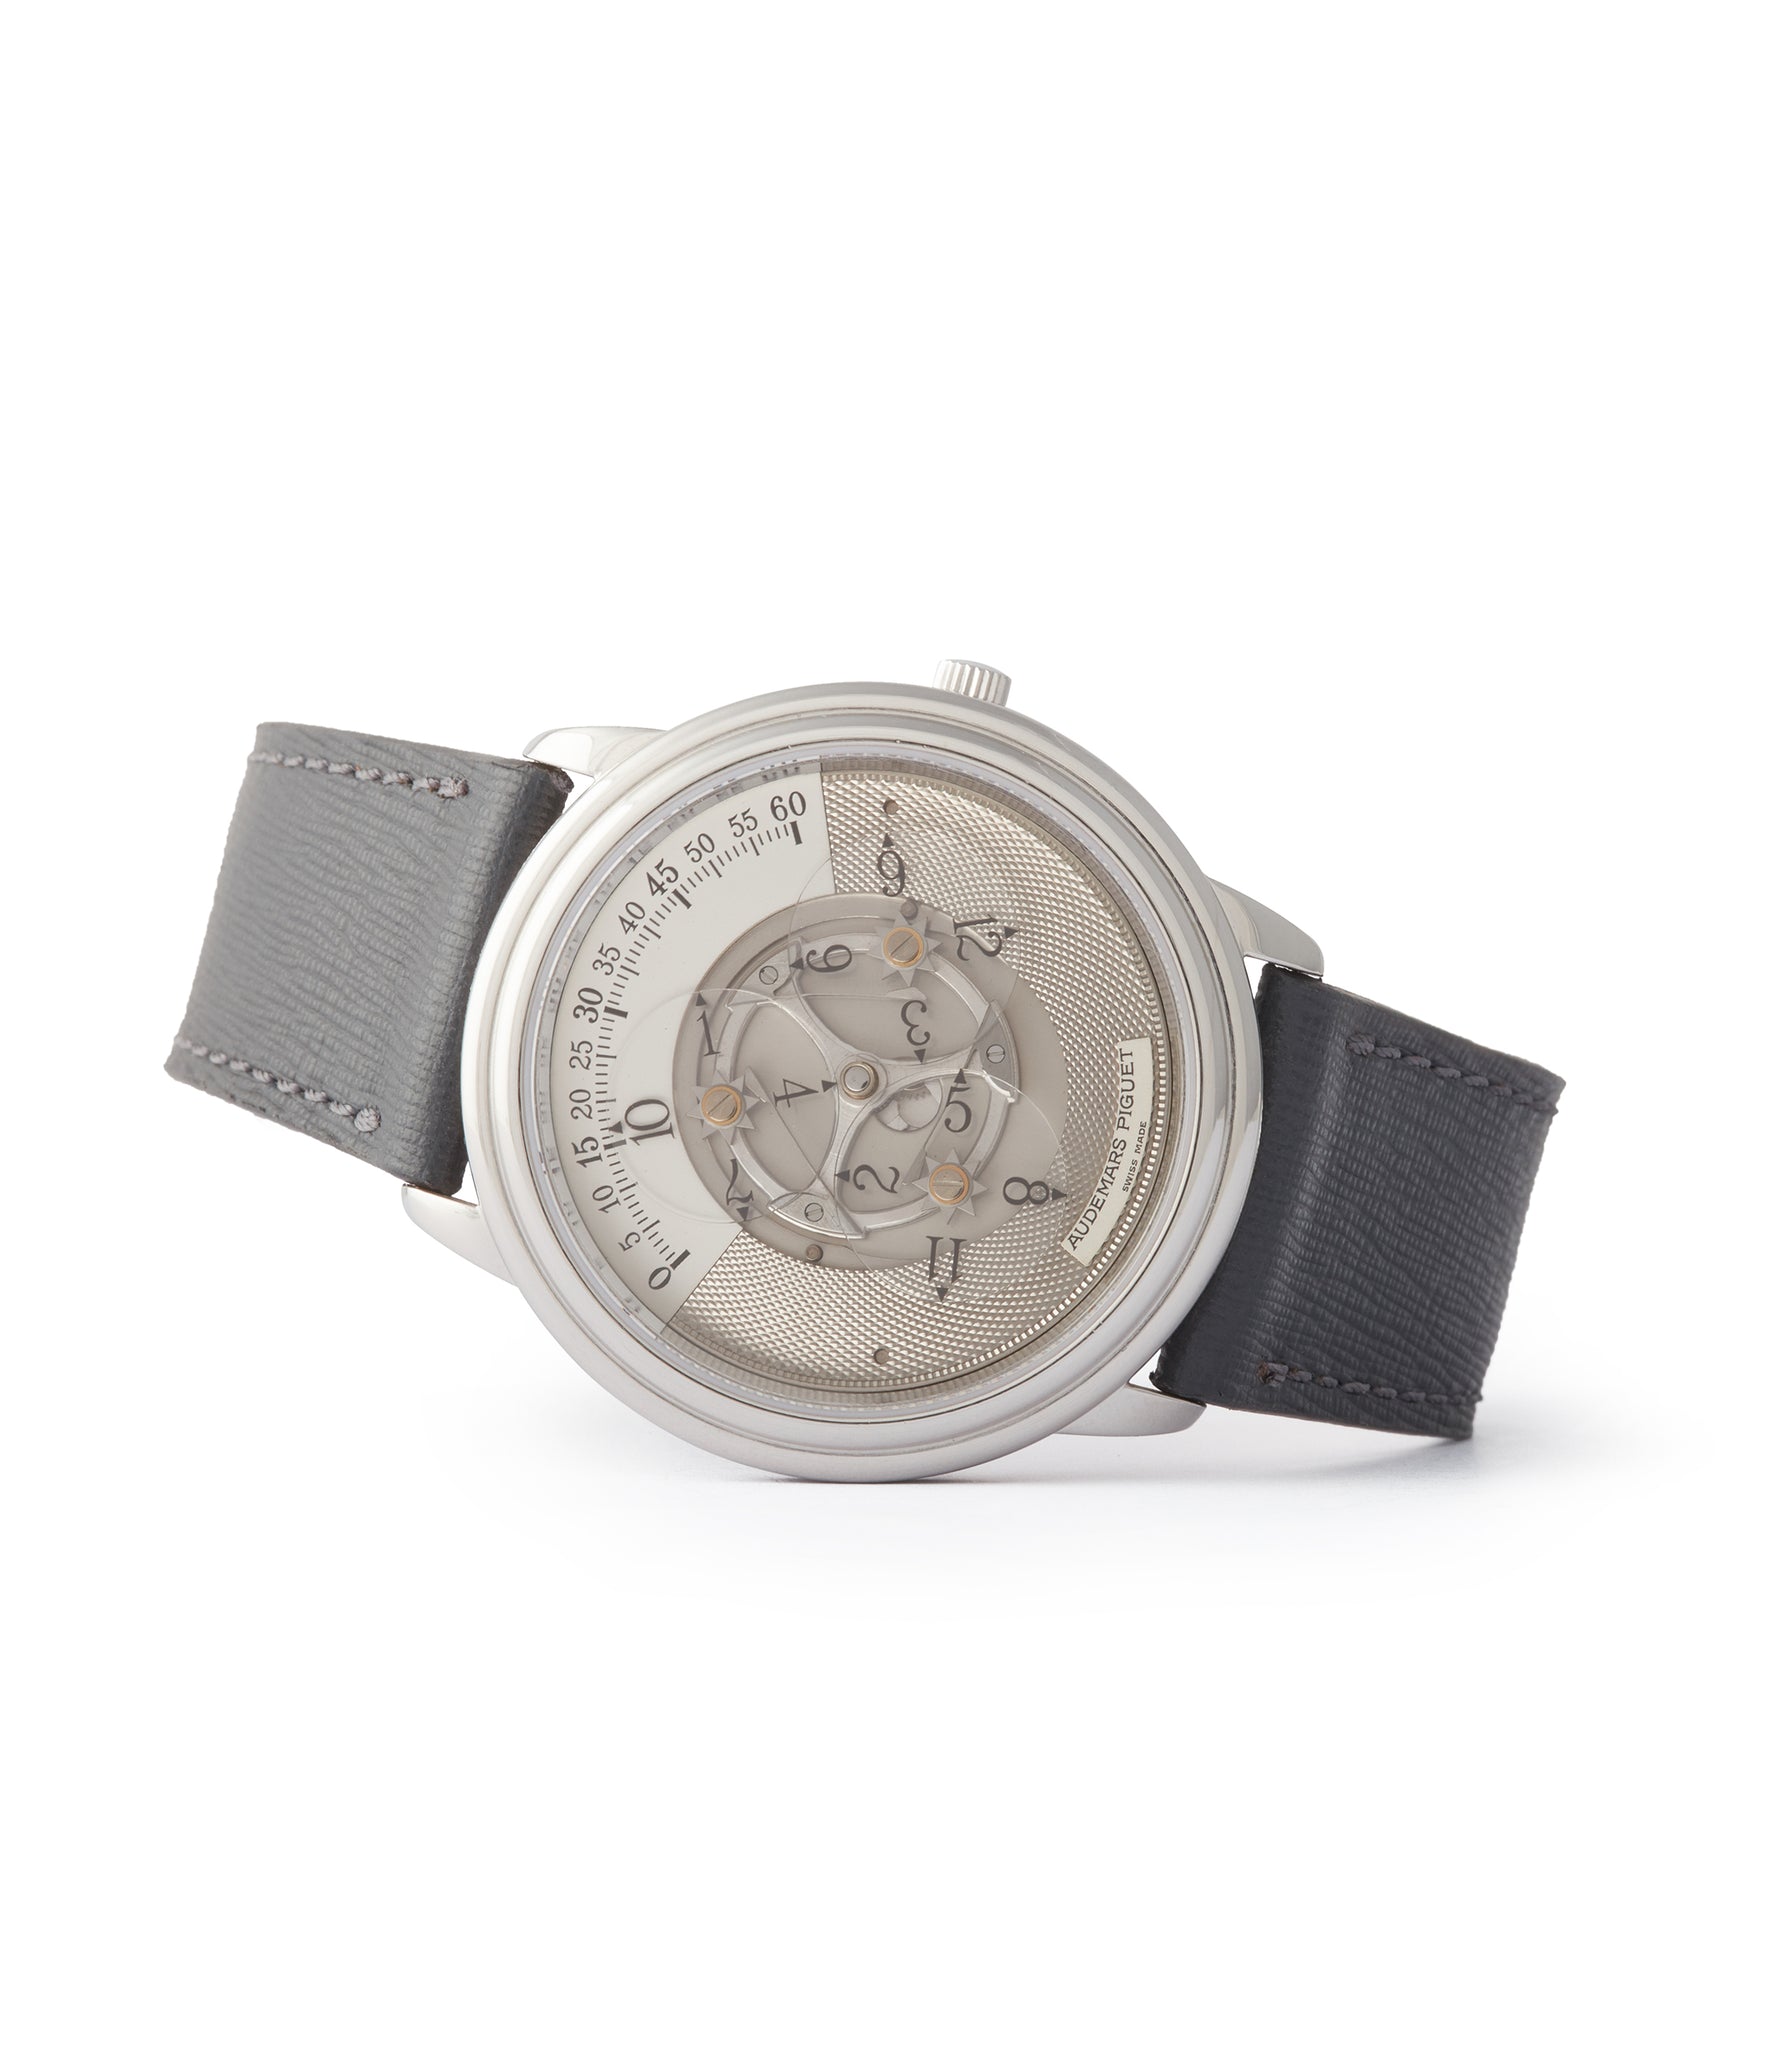 side-shot rare Audemars Piguet Star Wheel  25720PT platinum time-only dress watch for sale online at A Collected Man London